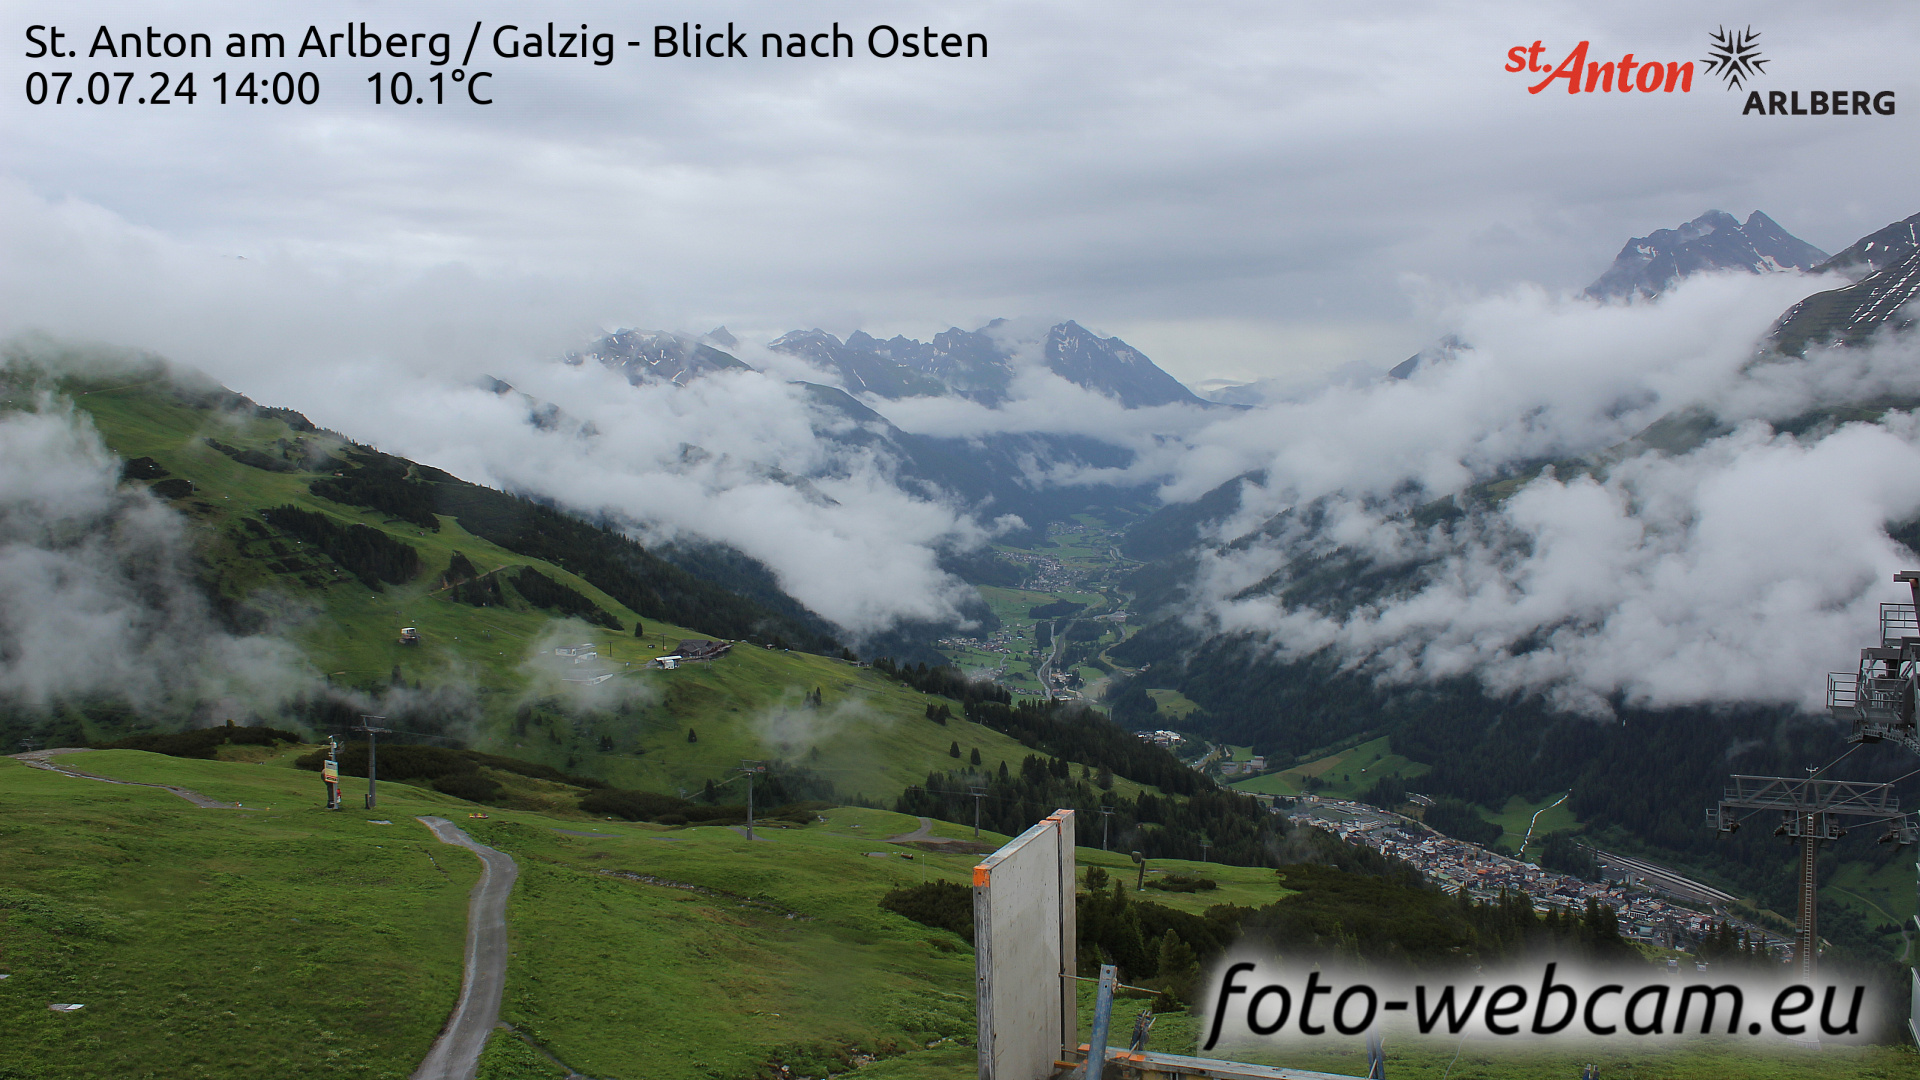 St. Anton am Arlberg Thu. 14:01